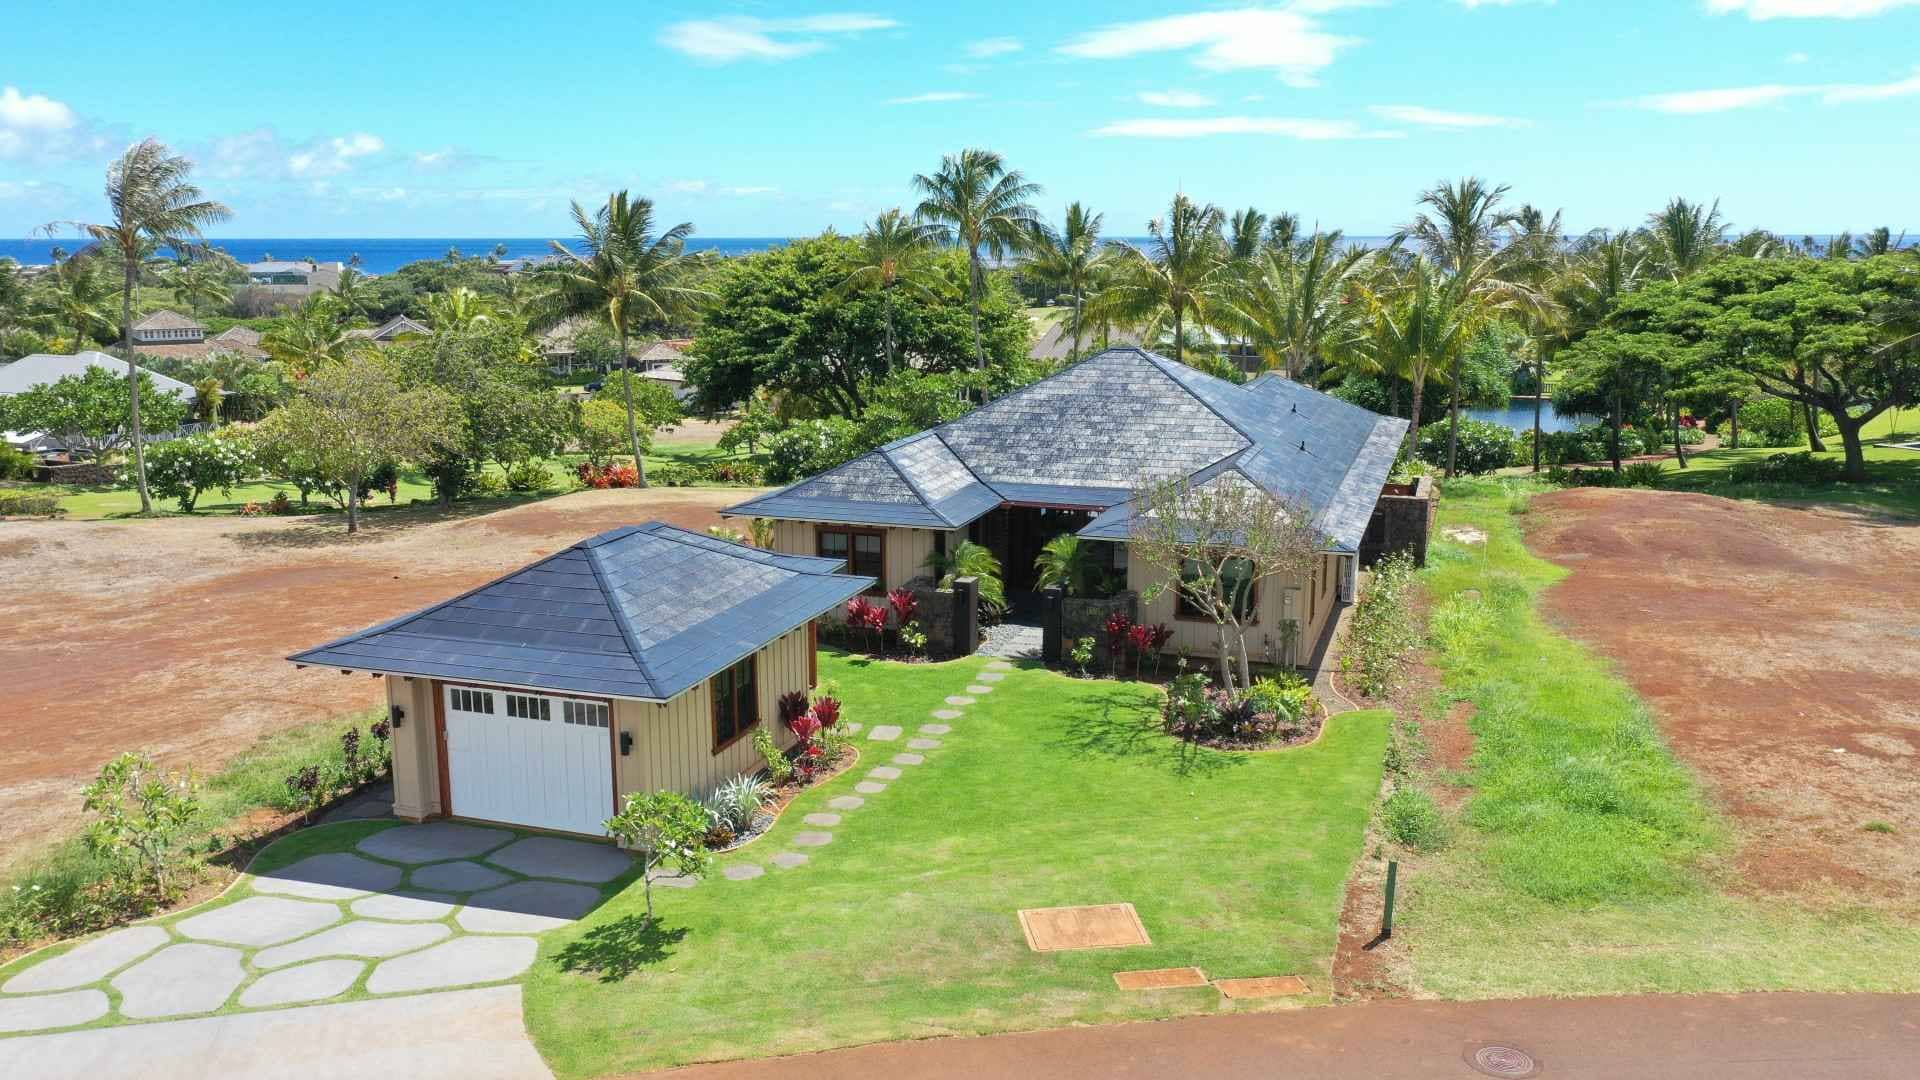 Tesla Solar Roof by Rising Sun Solar on Maui home in Hawaii